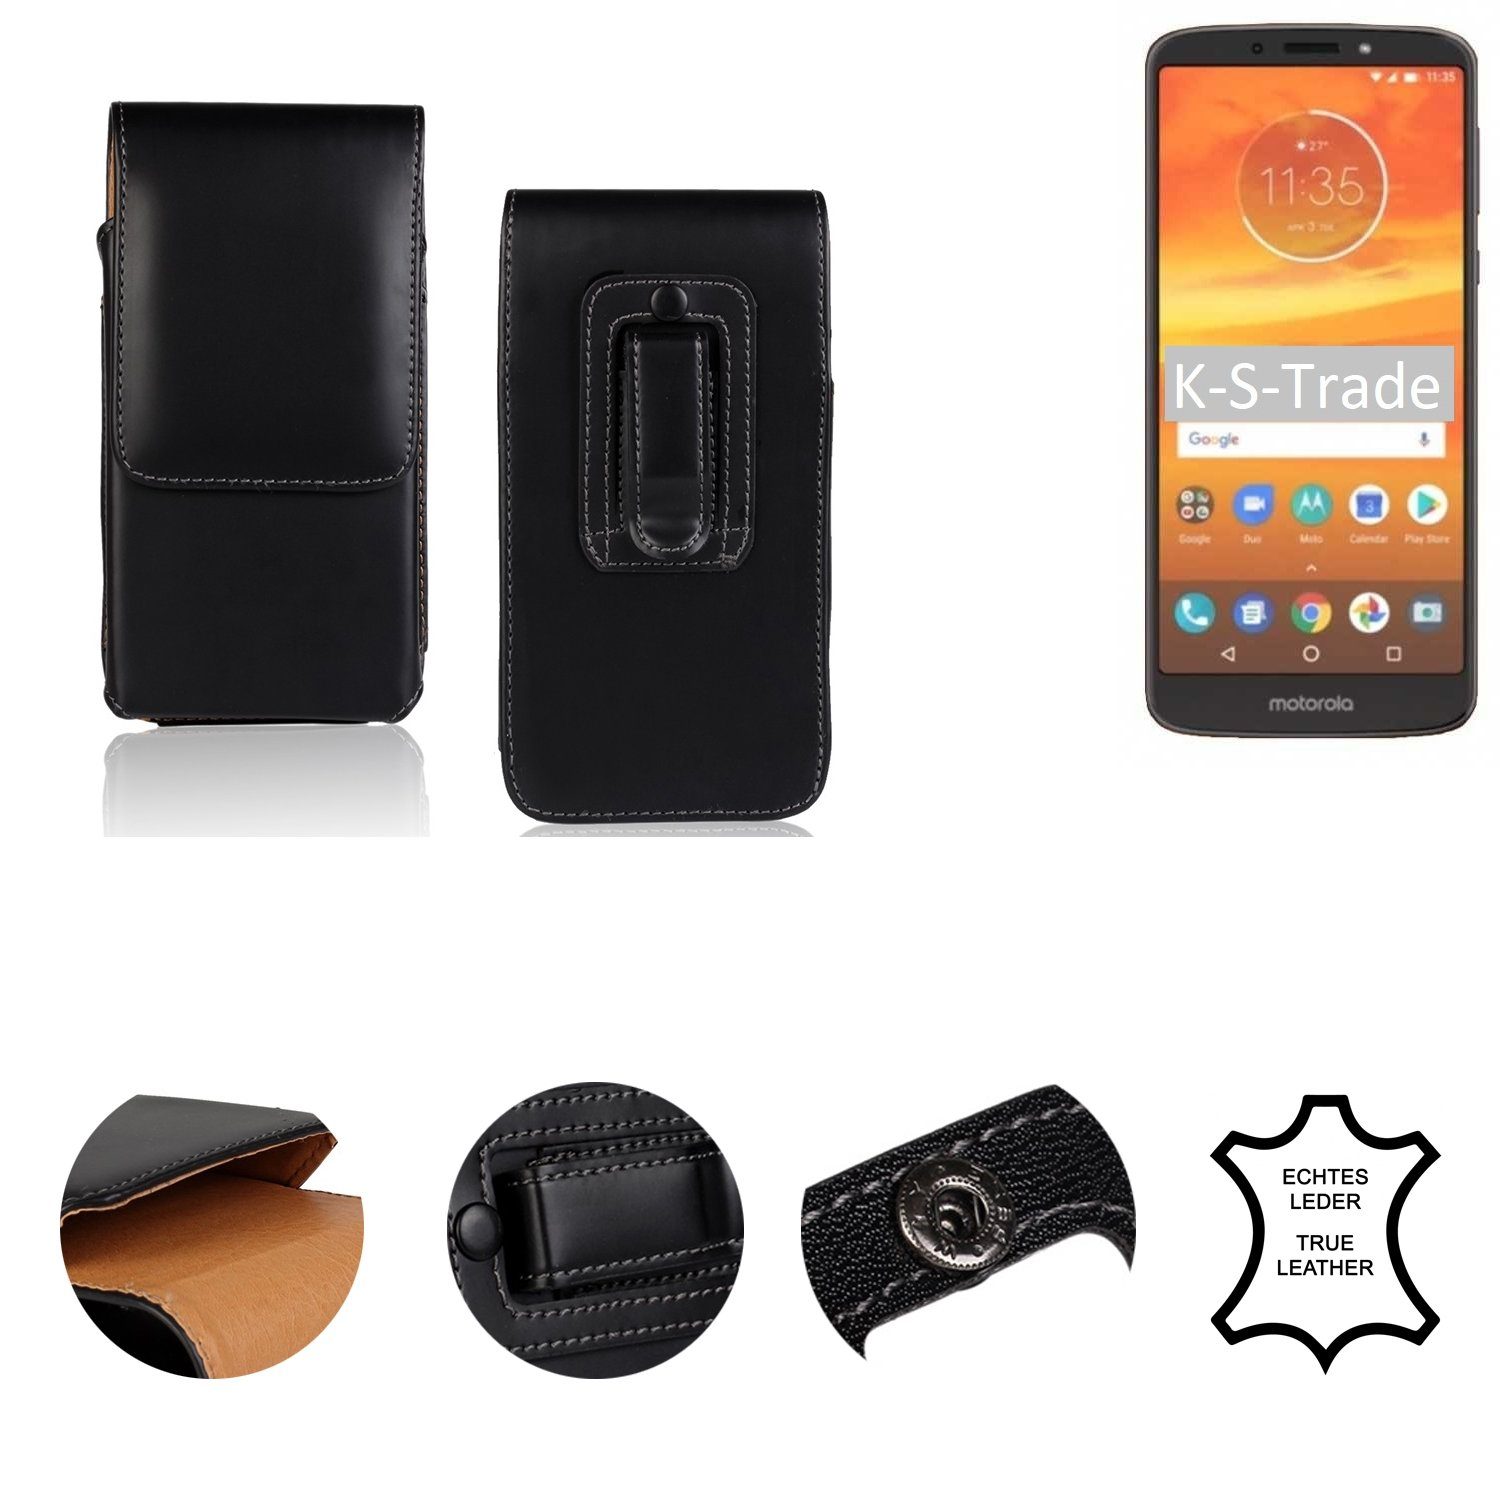 K-S-Trade Handyhülle für Motorola Moto E5 Plus, Holster Gürtel Tasche Handy  Hülle Schutz Hülle Handyhülle Leder